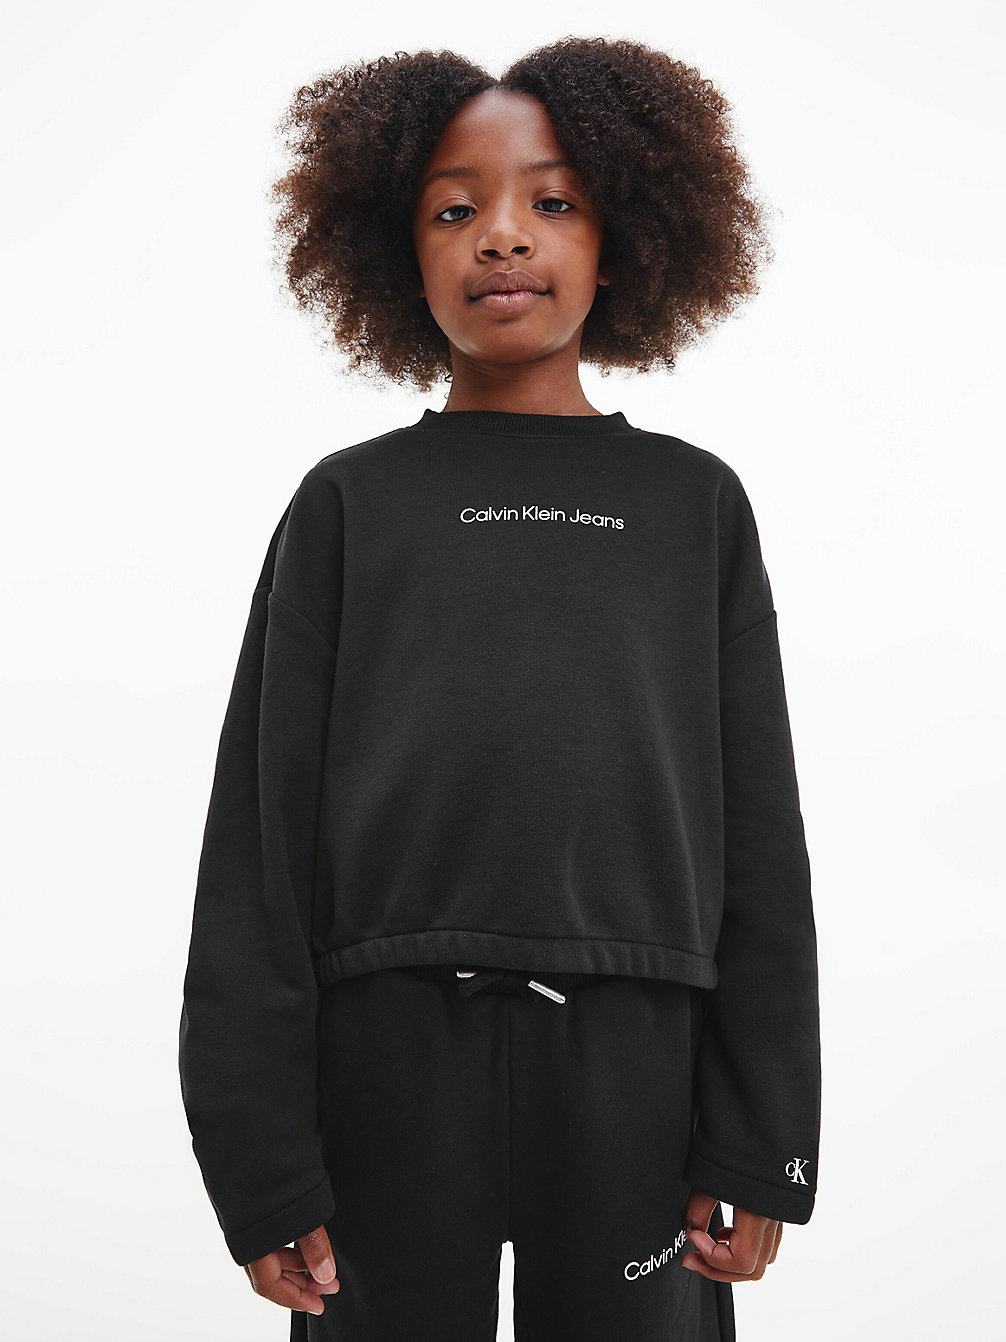 CK BLACK Tracksuit Set undefined girls Calvin Klein